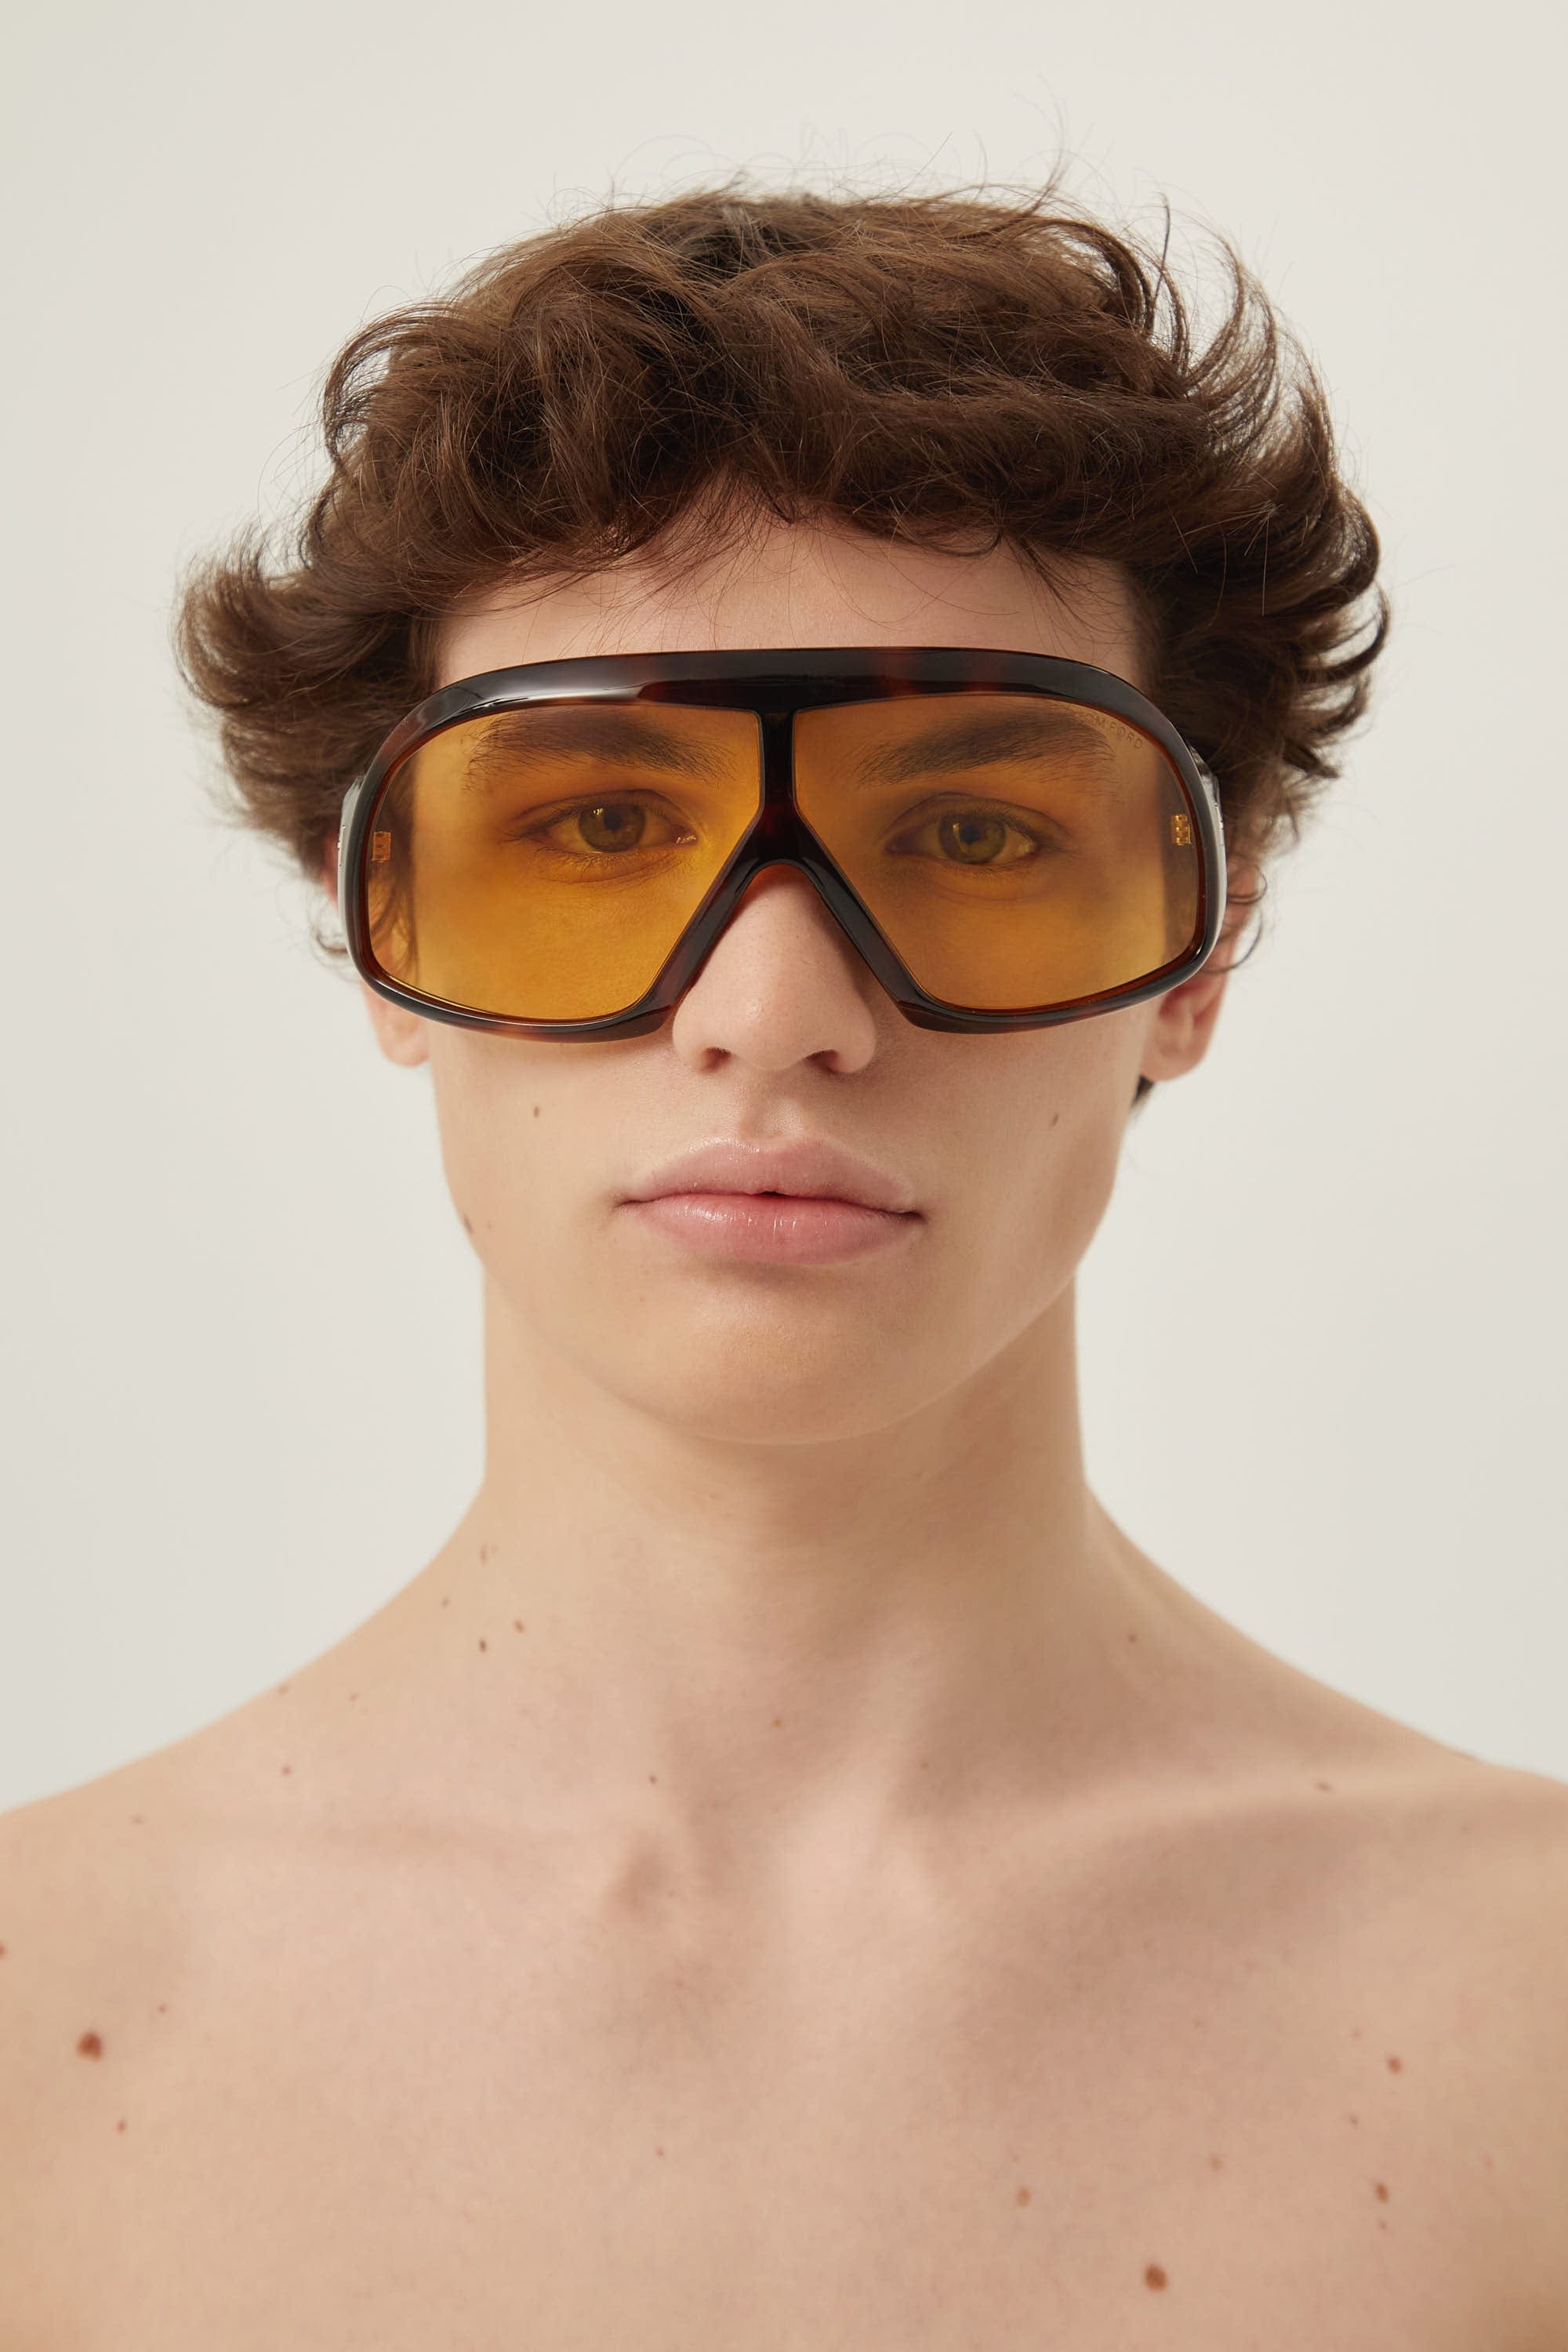 Tom Ford acetate mask featuring yellow lenses - Eyewear Club